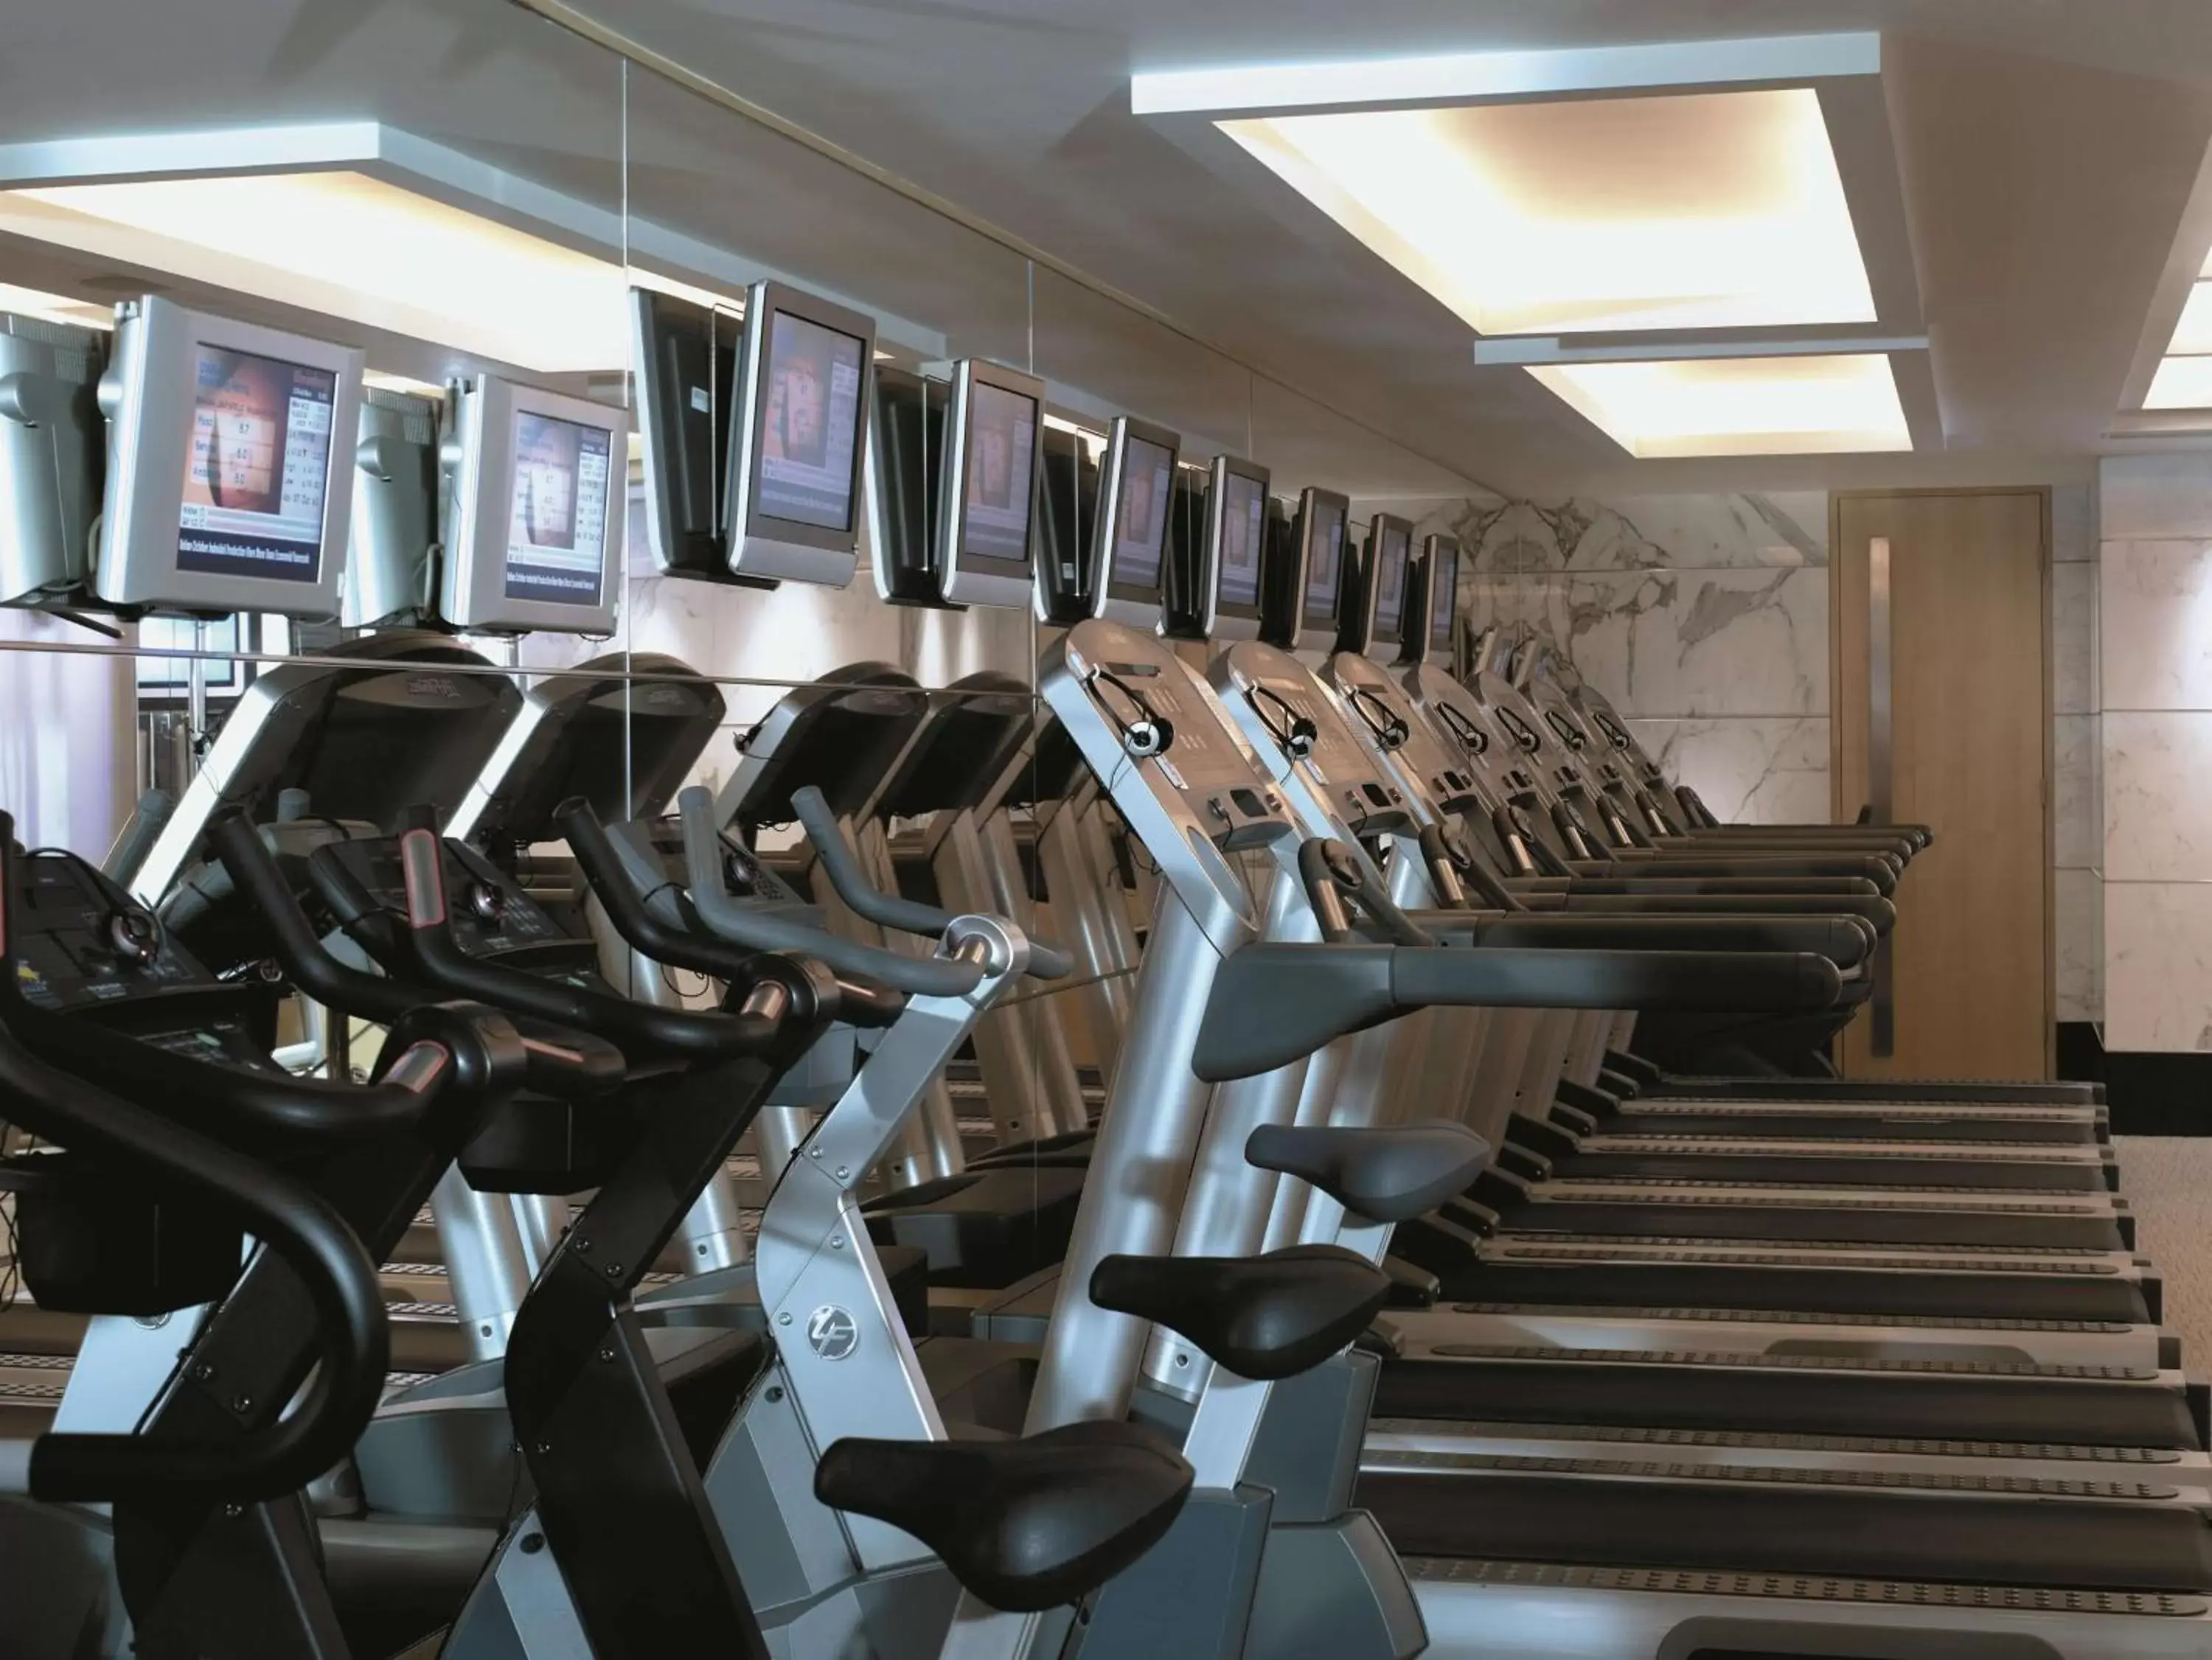 Fitness centre/facilities, Fitness Center/Facilities in Kowloon Shangri-La, Hong Kong